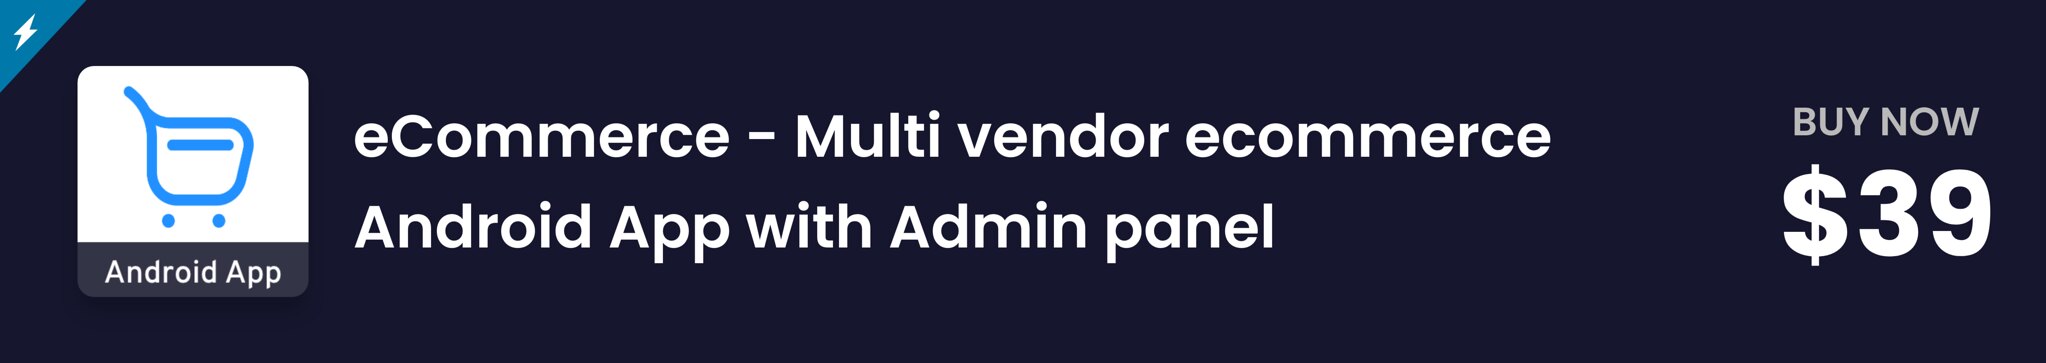 eCommerce - Multi vendor ecommerce iOS App with Admin panel - 1